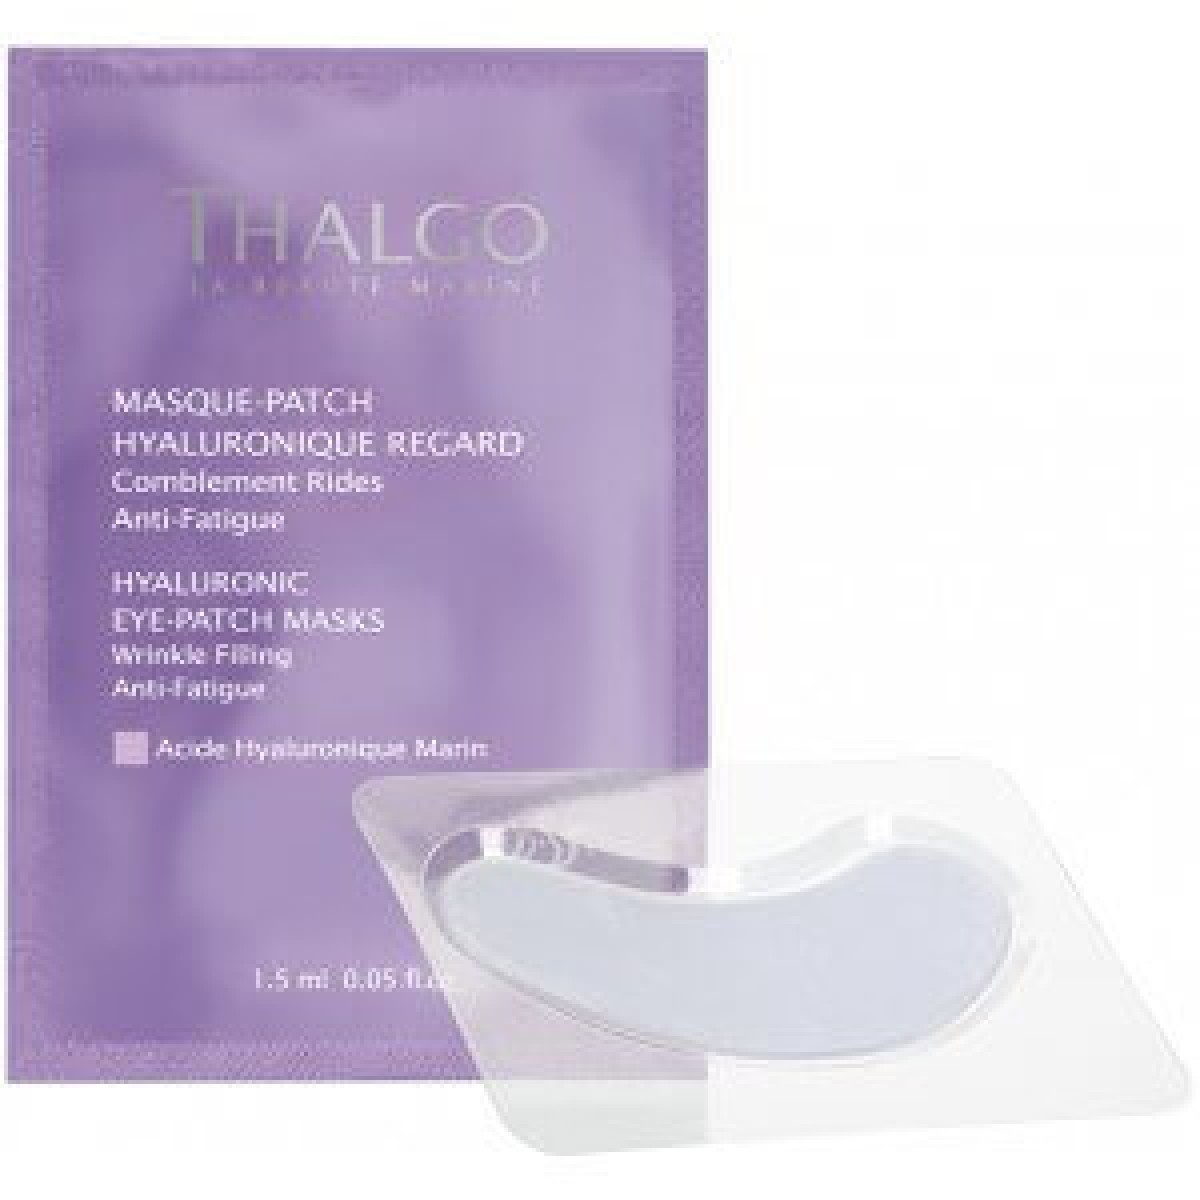 Thalgo Hyaluronic Eye Patch Mask à Thalgo Online Shop 